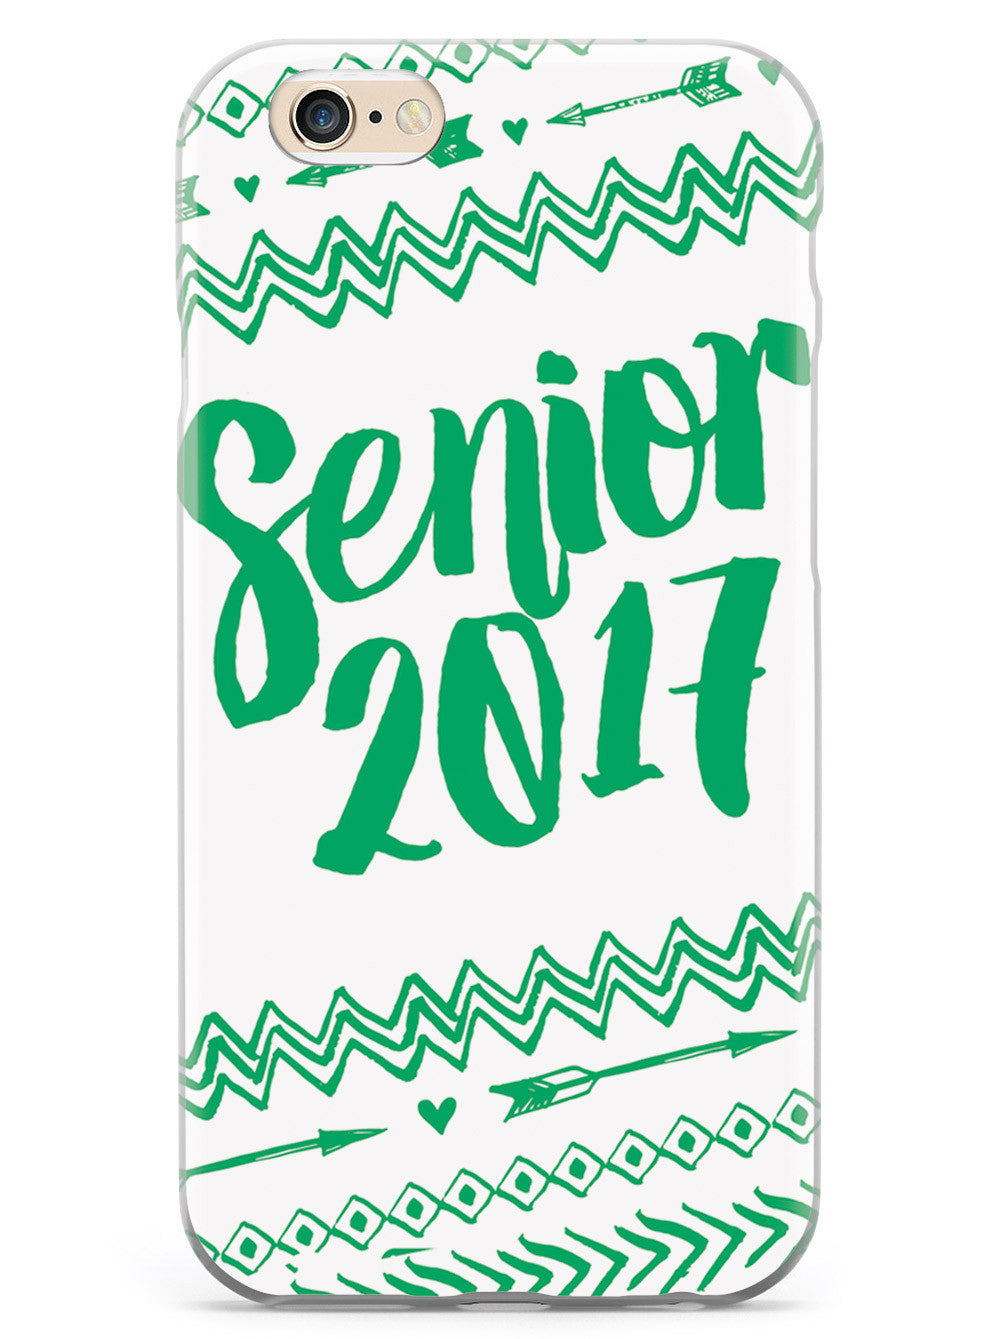 Senior 2017 - Green Case